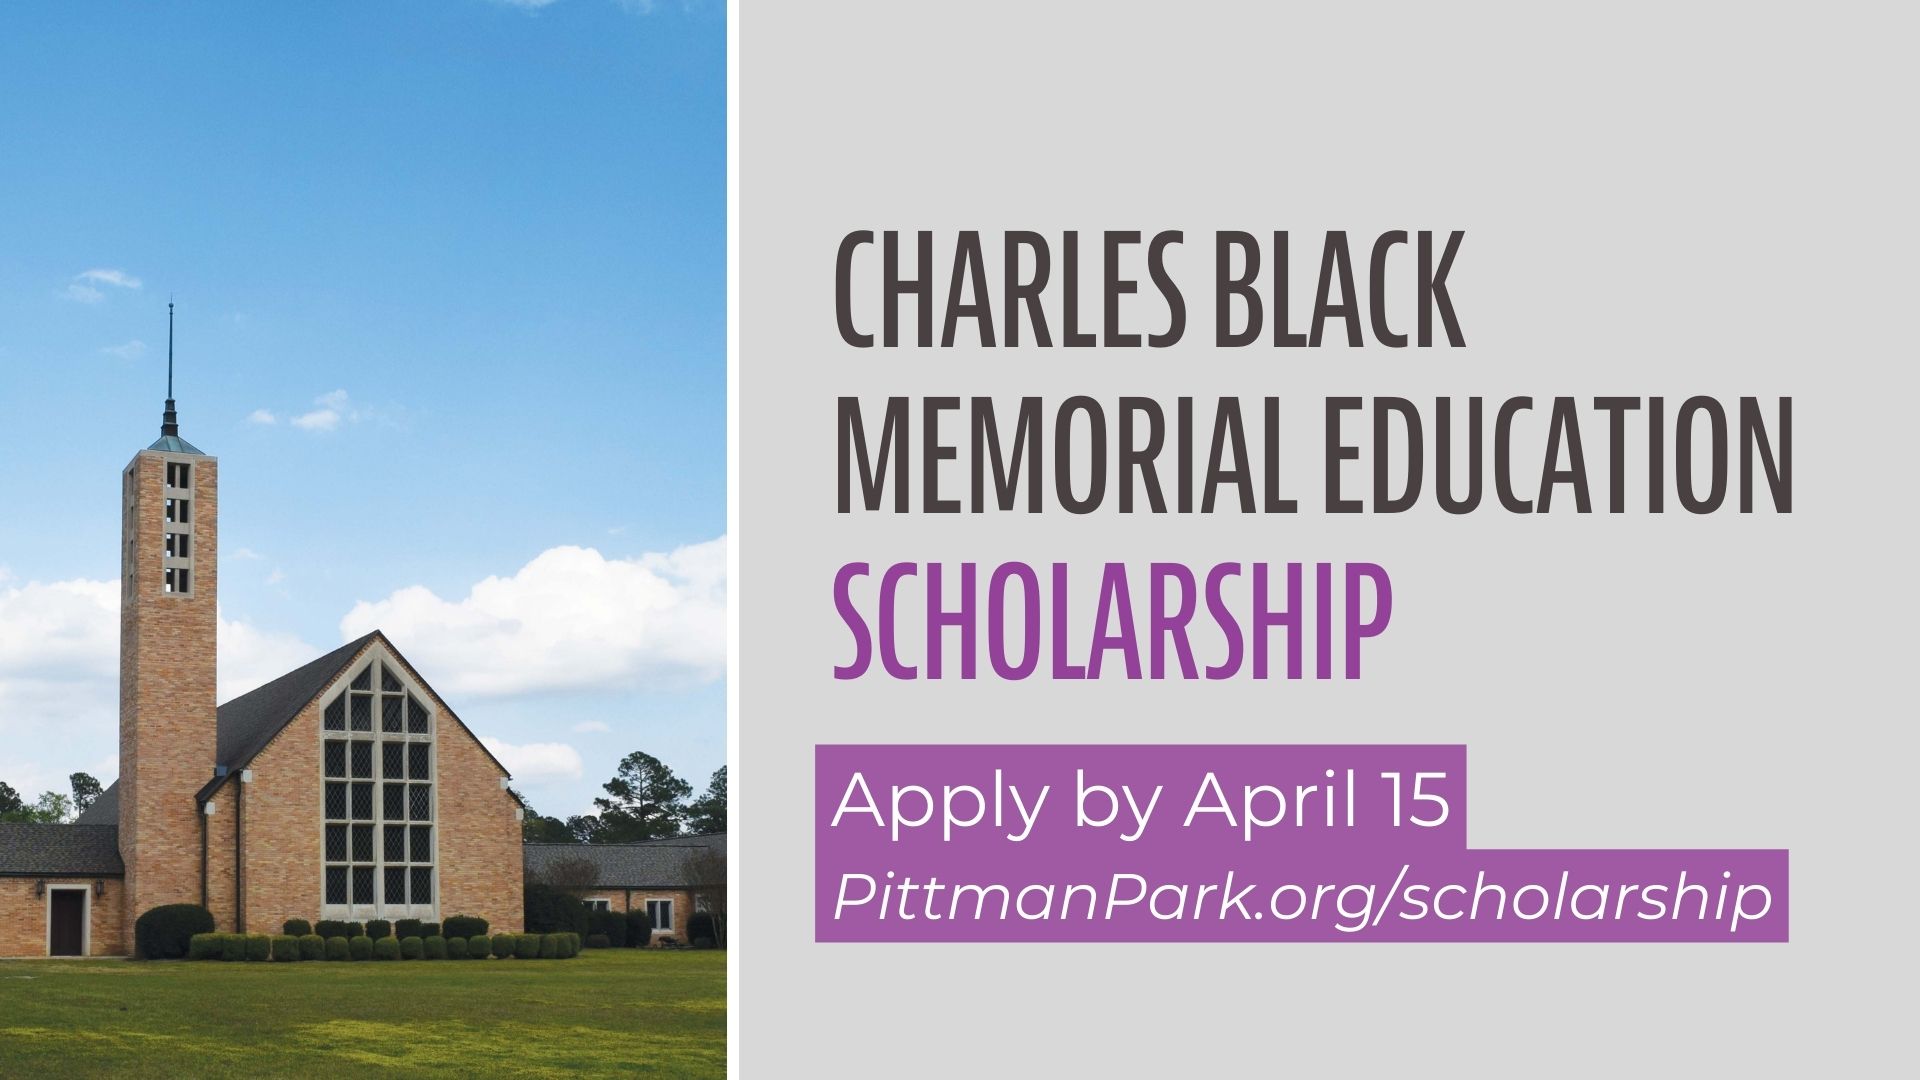 Photo of church, Charles Black Memorial Education Scholarship